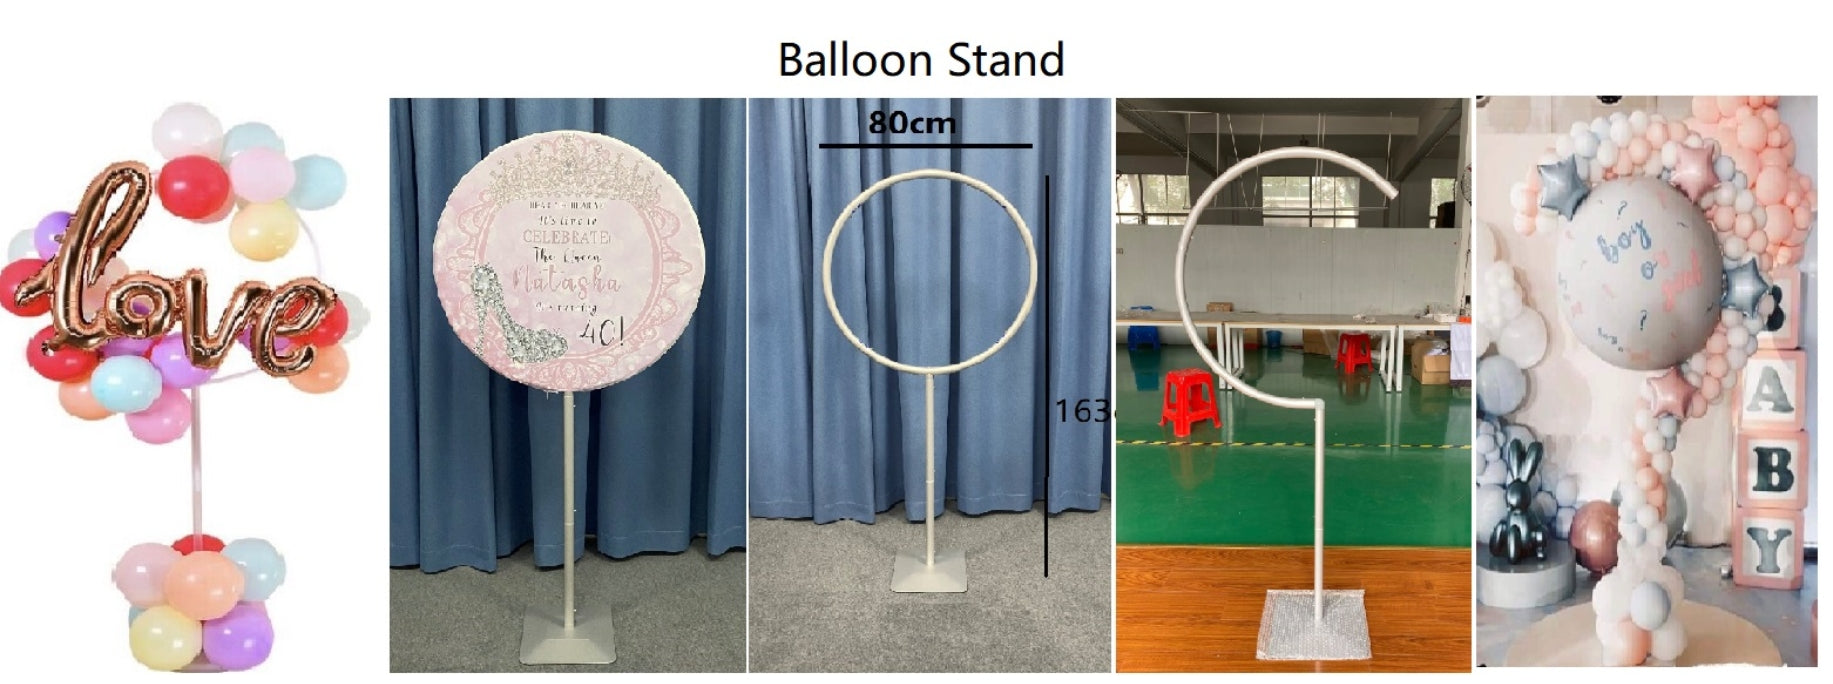 Aluminum Balloon Stand / Question Mark Balloon Stand